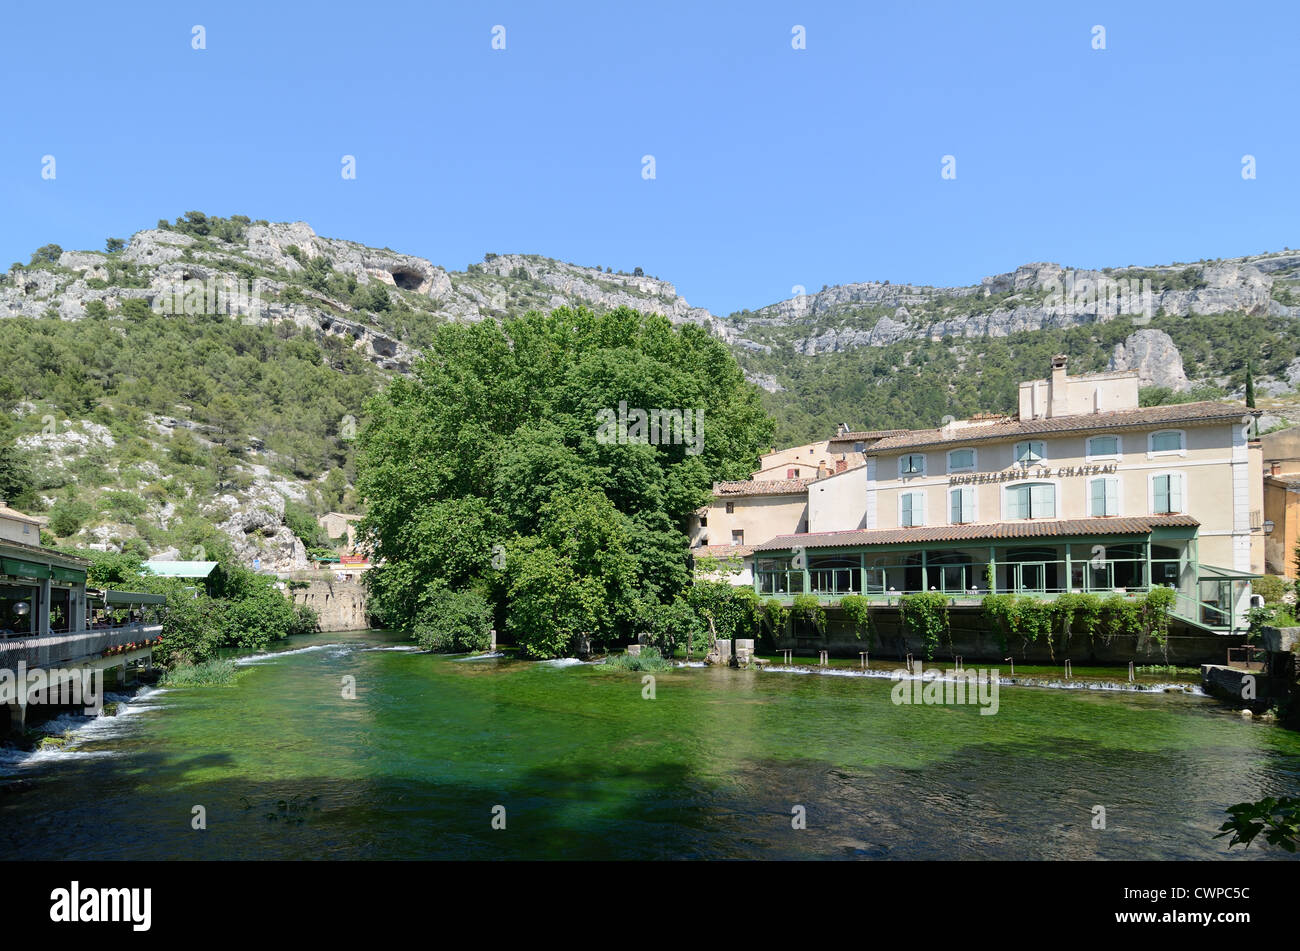 Hotel und Restaurant am Fluss am Fluss Sorgue in Fontaine-de-Vaucluse Provence Frankreich Stockfoto